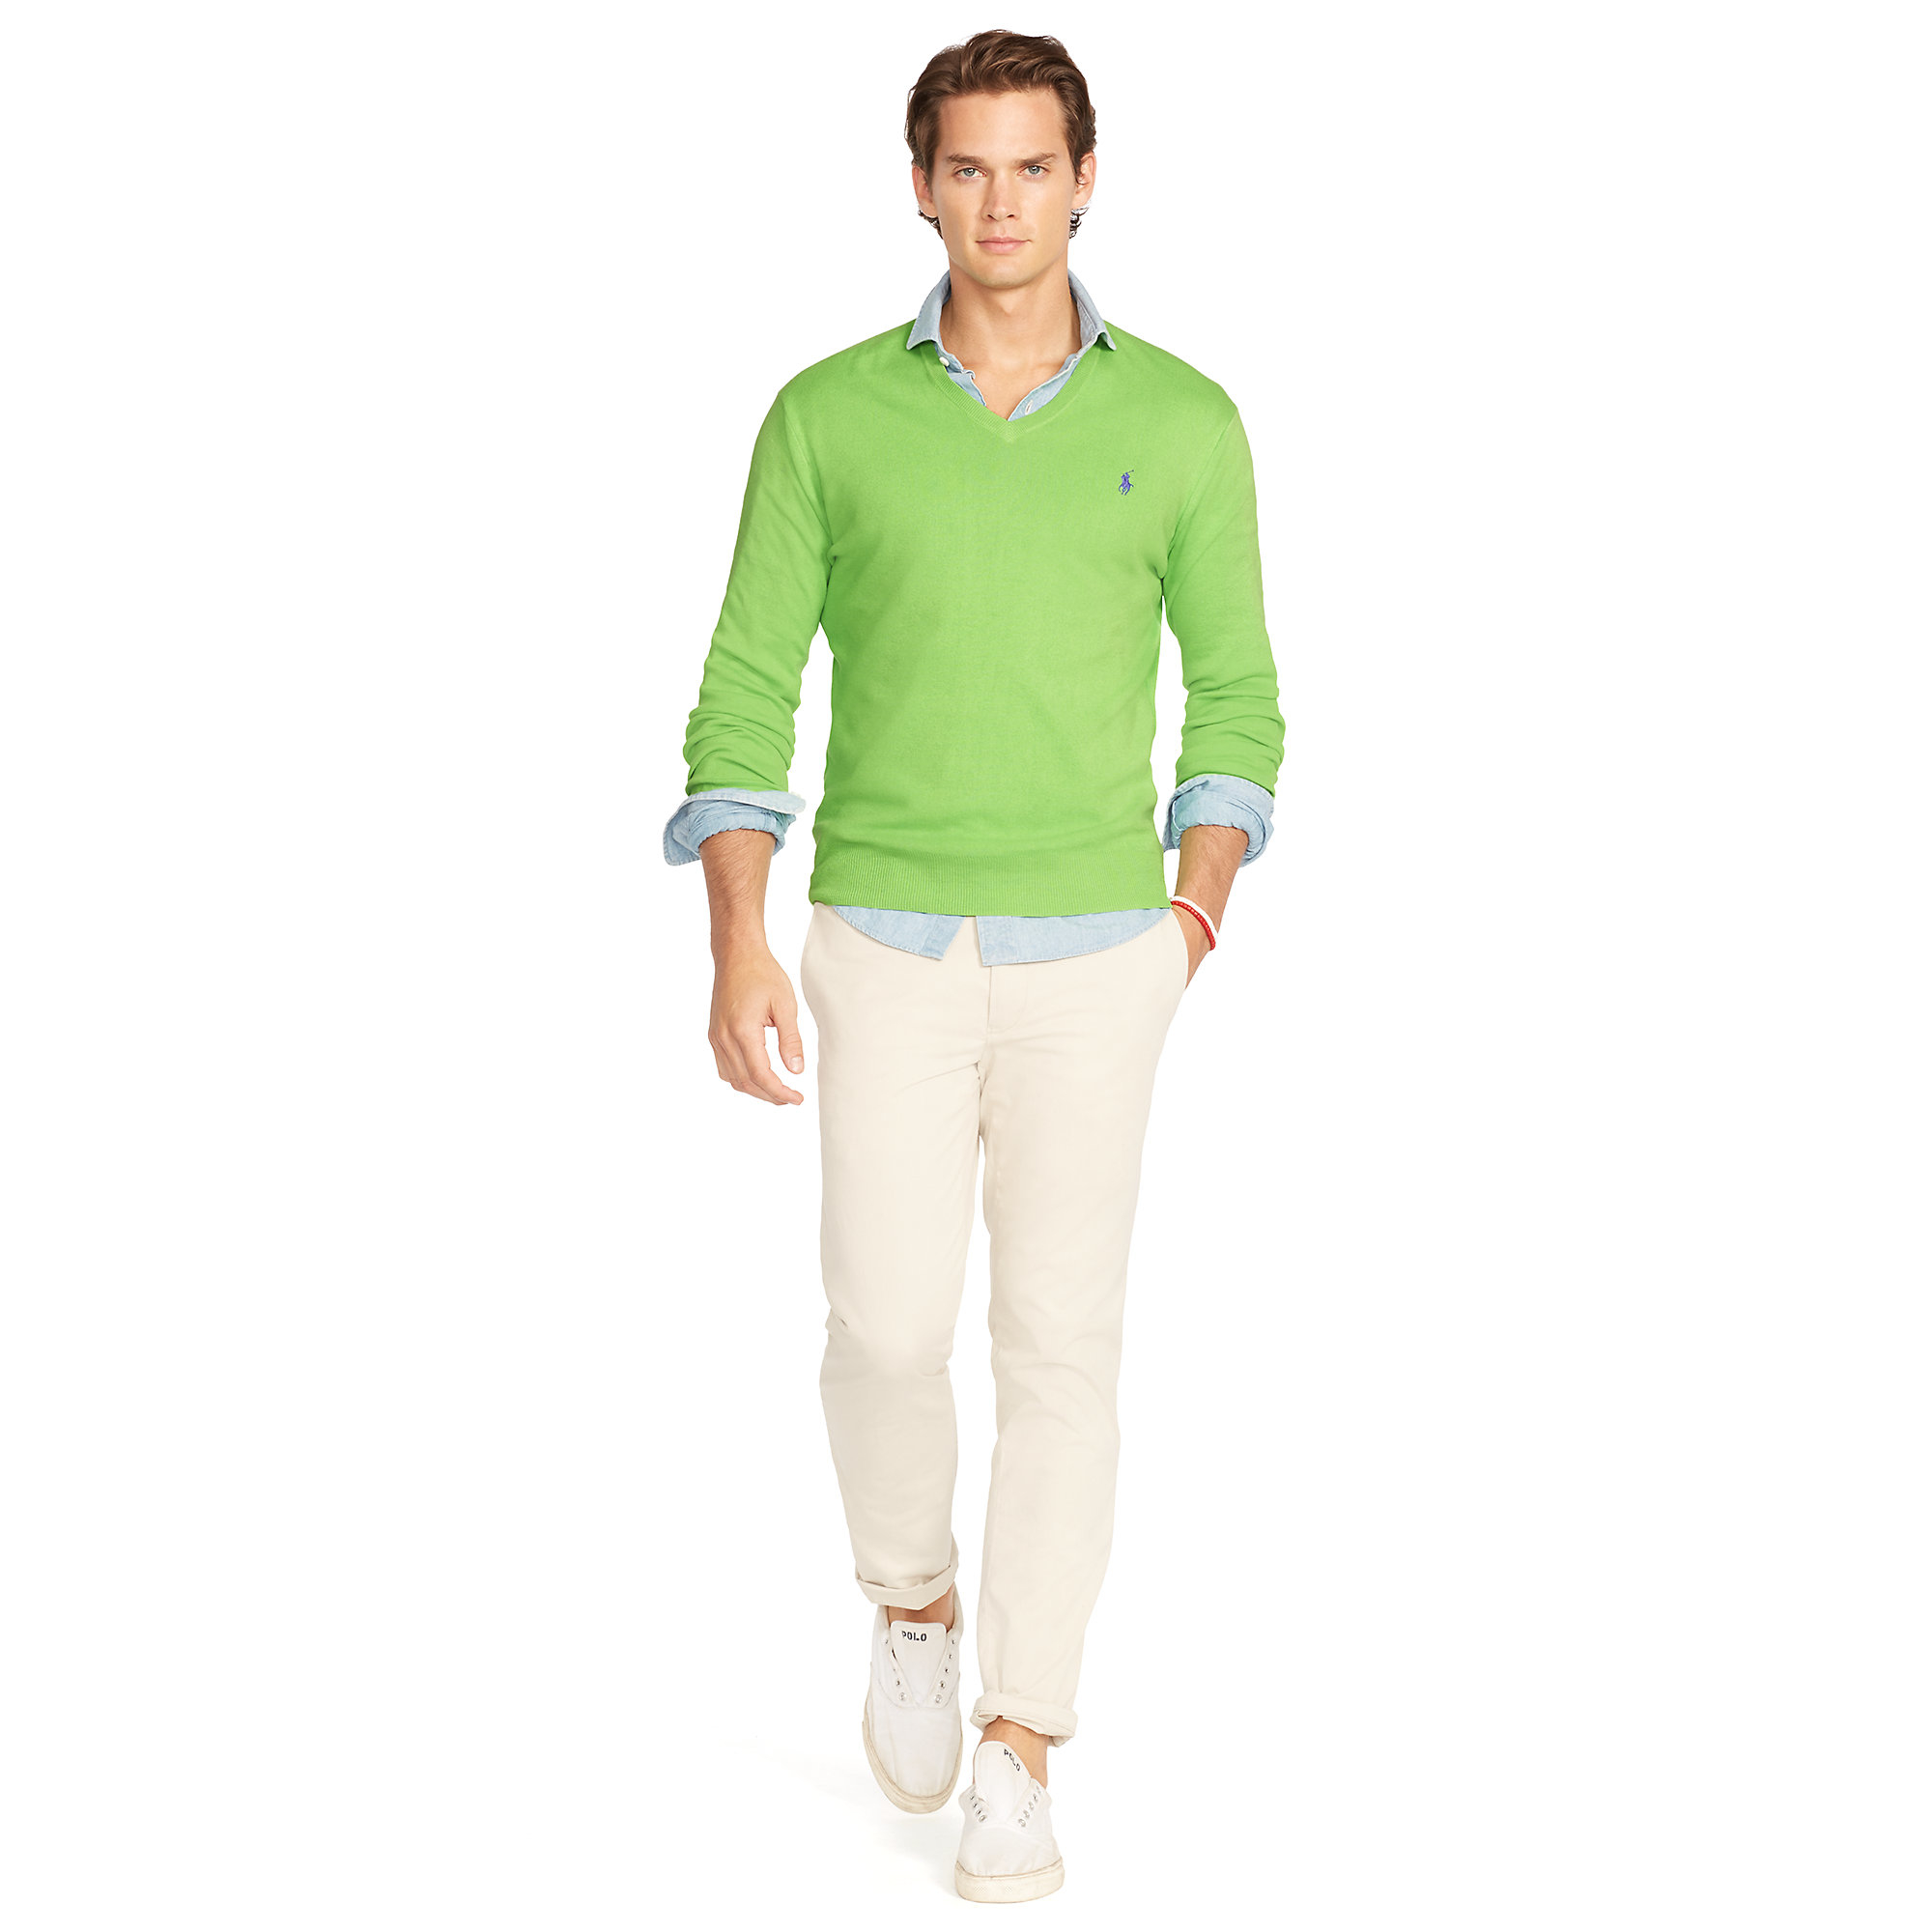 Lyst - Polo Ralph Lauren Pima Cotton V-neck Sweater in Green for Men